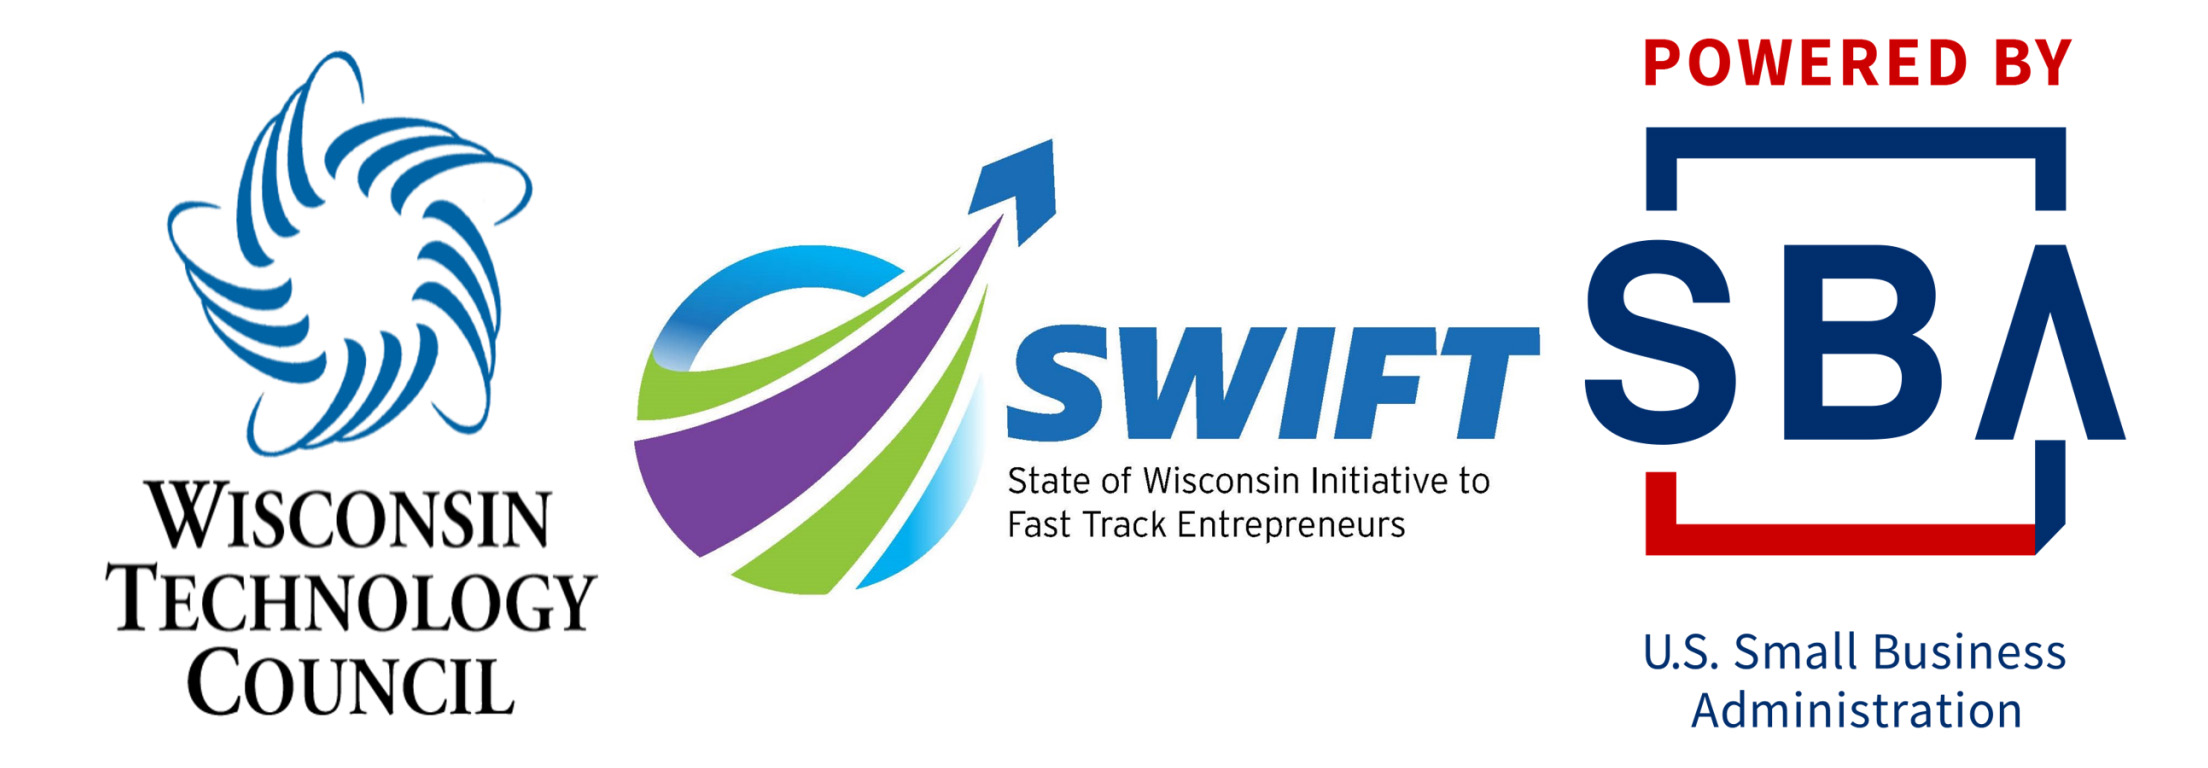 WTC-SWIFT-SBA-combined-logos